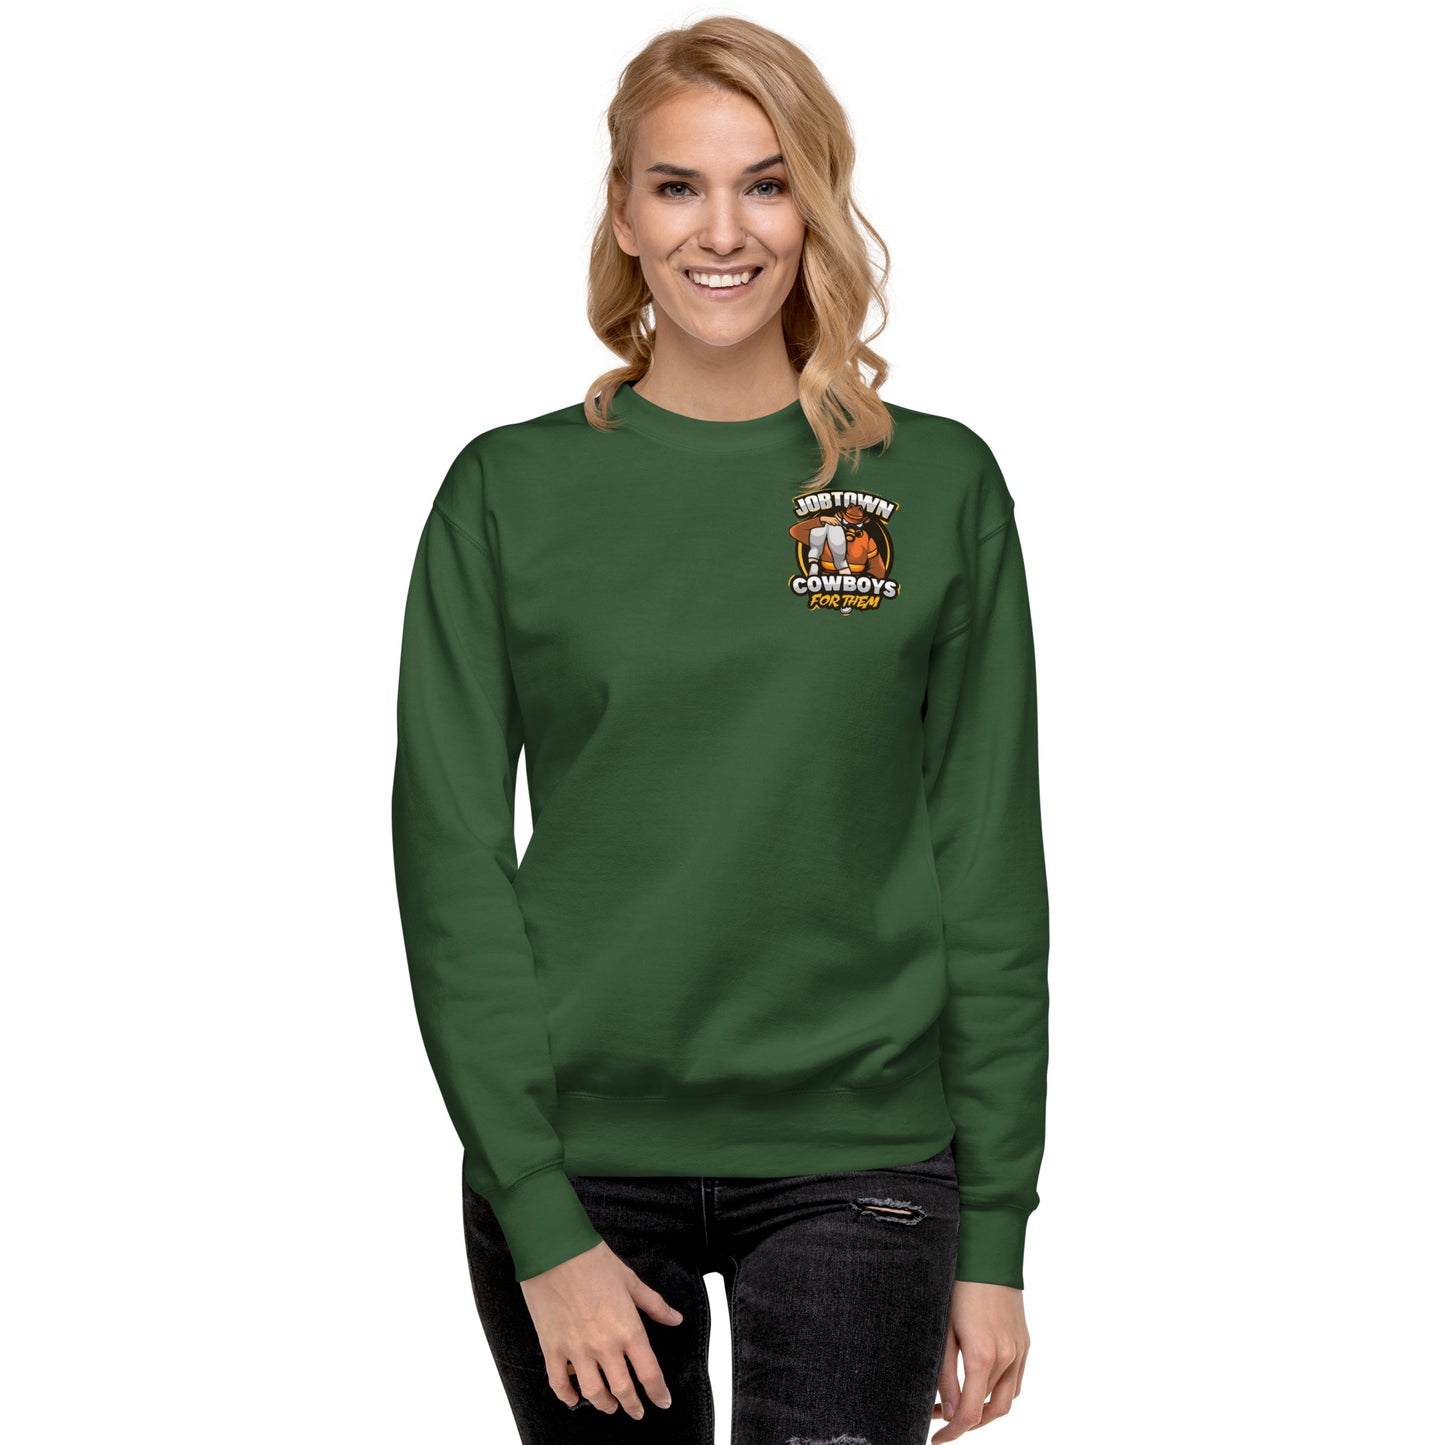 Jobtown Cowboys Firefighter - For Them Unisex Premium Sweatshirt